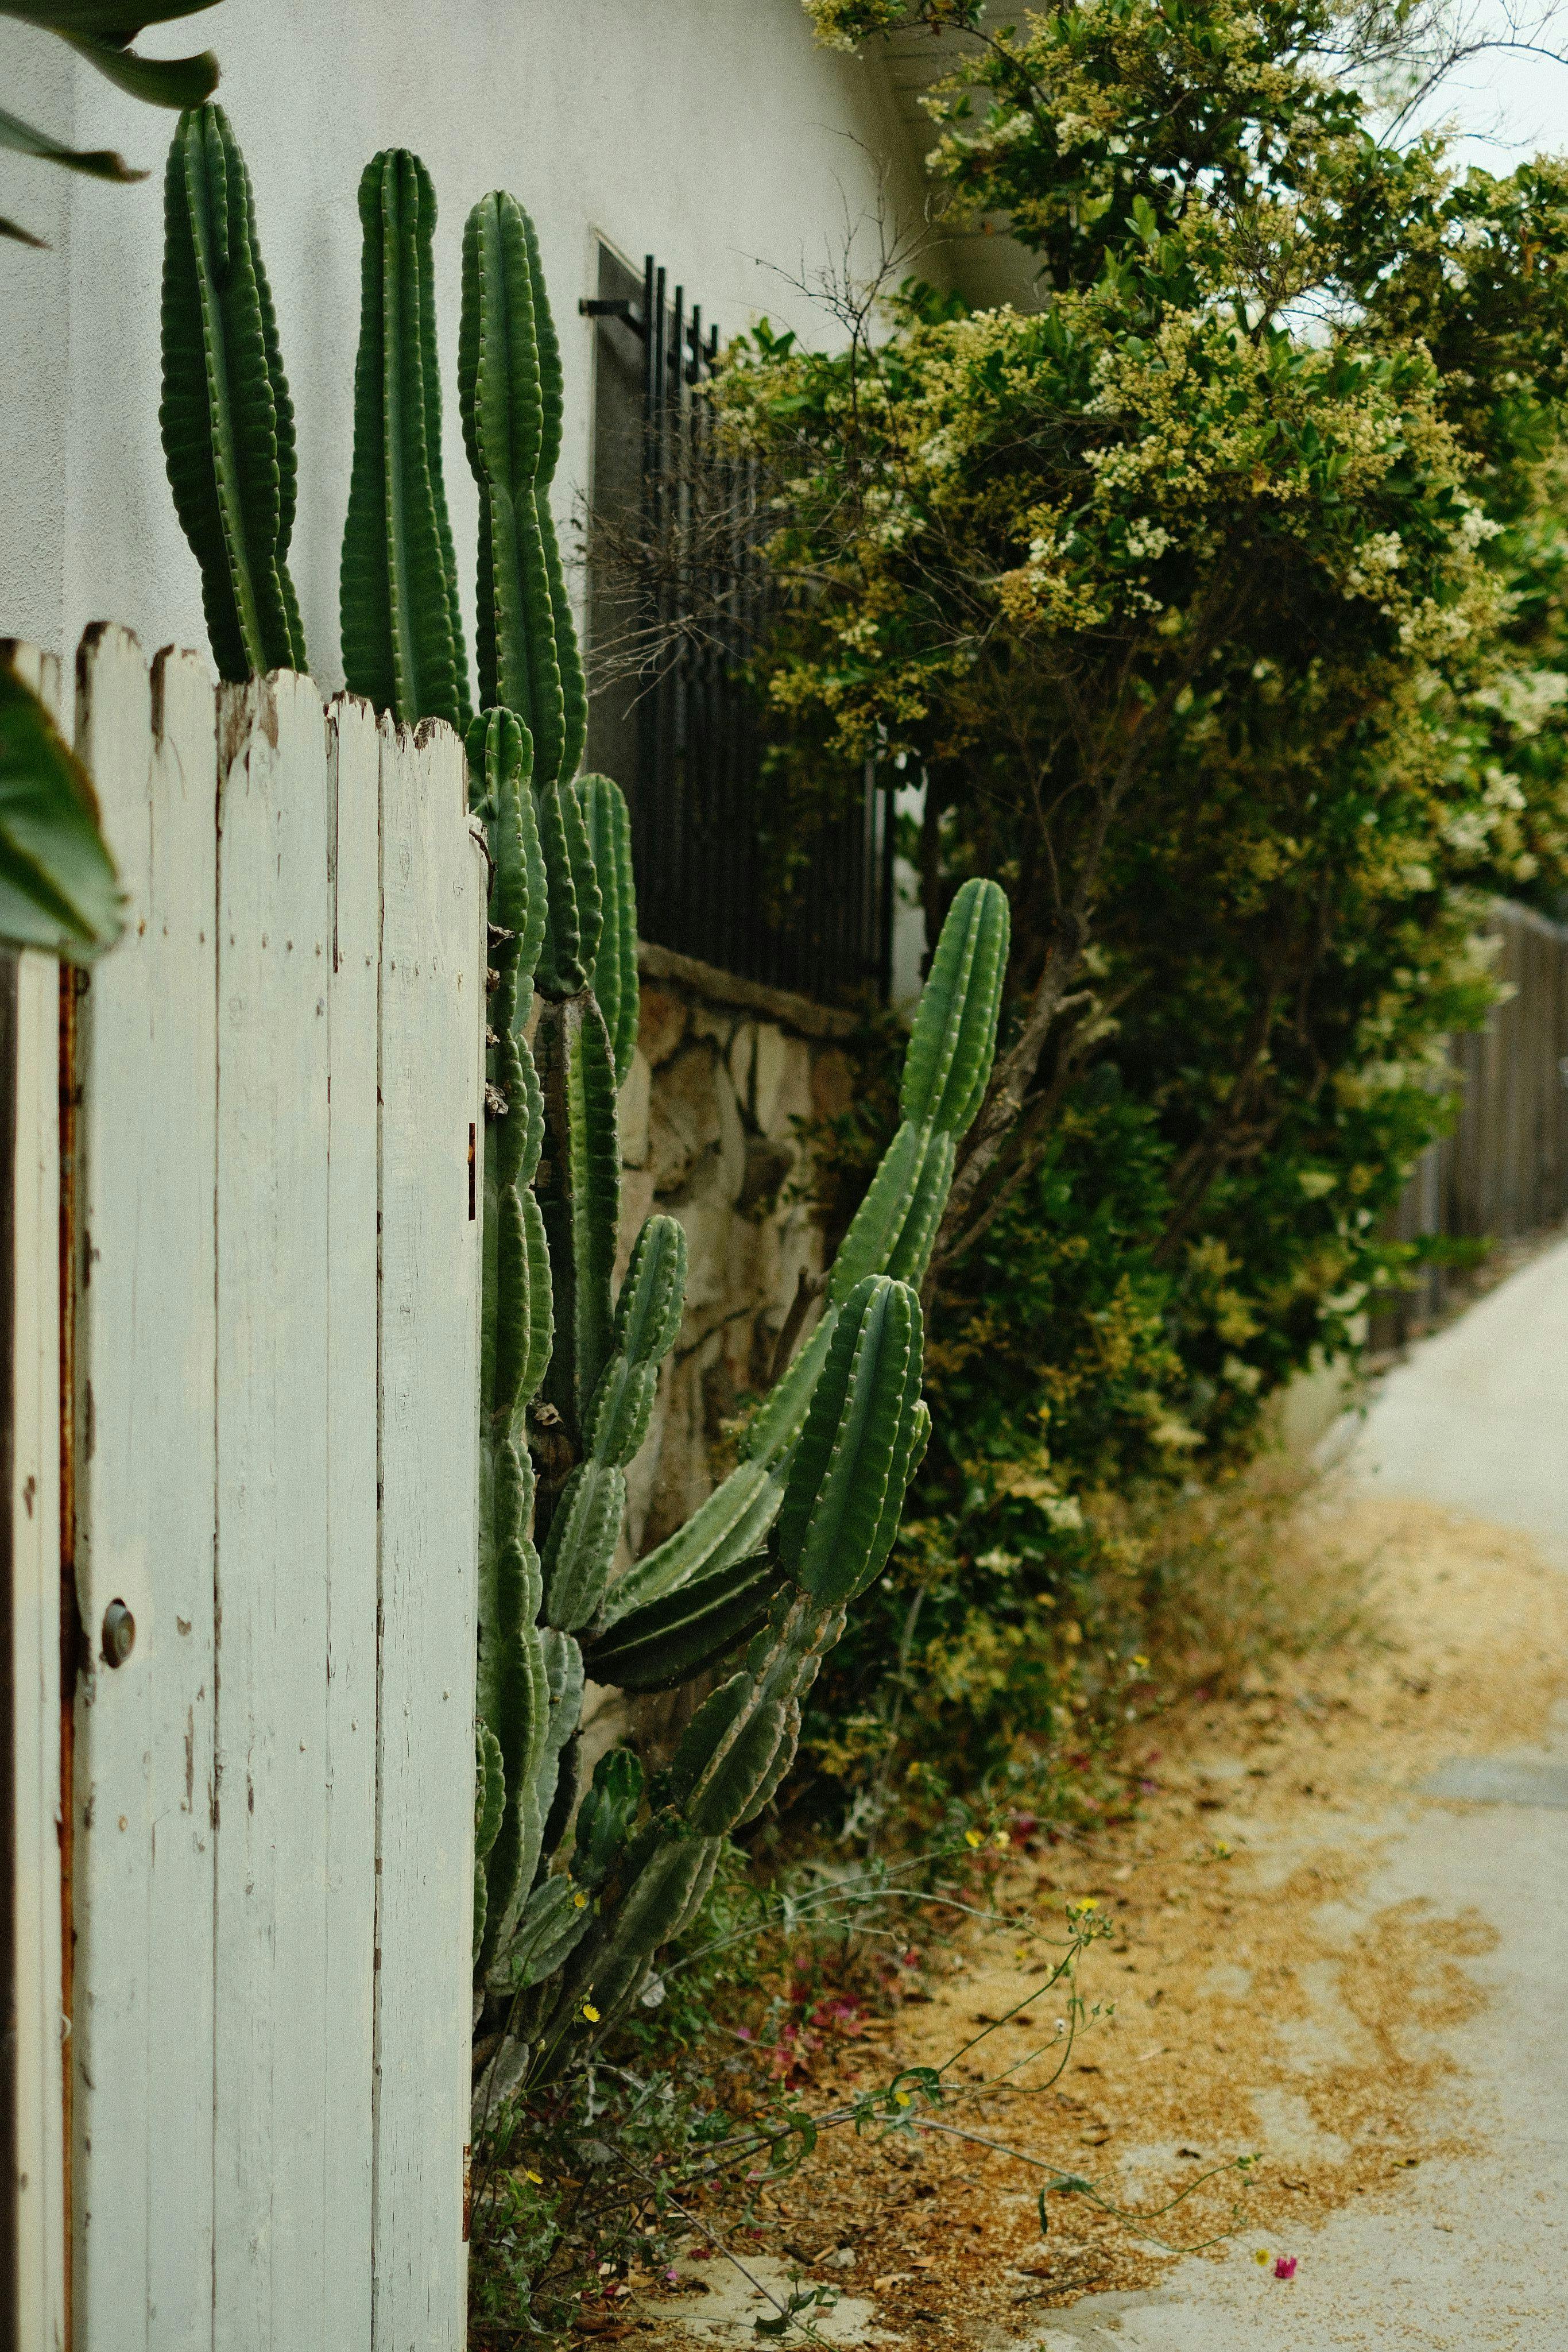 Cactus peek-a-boo